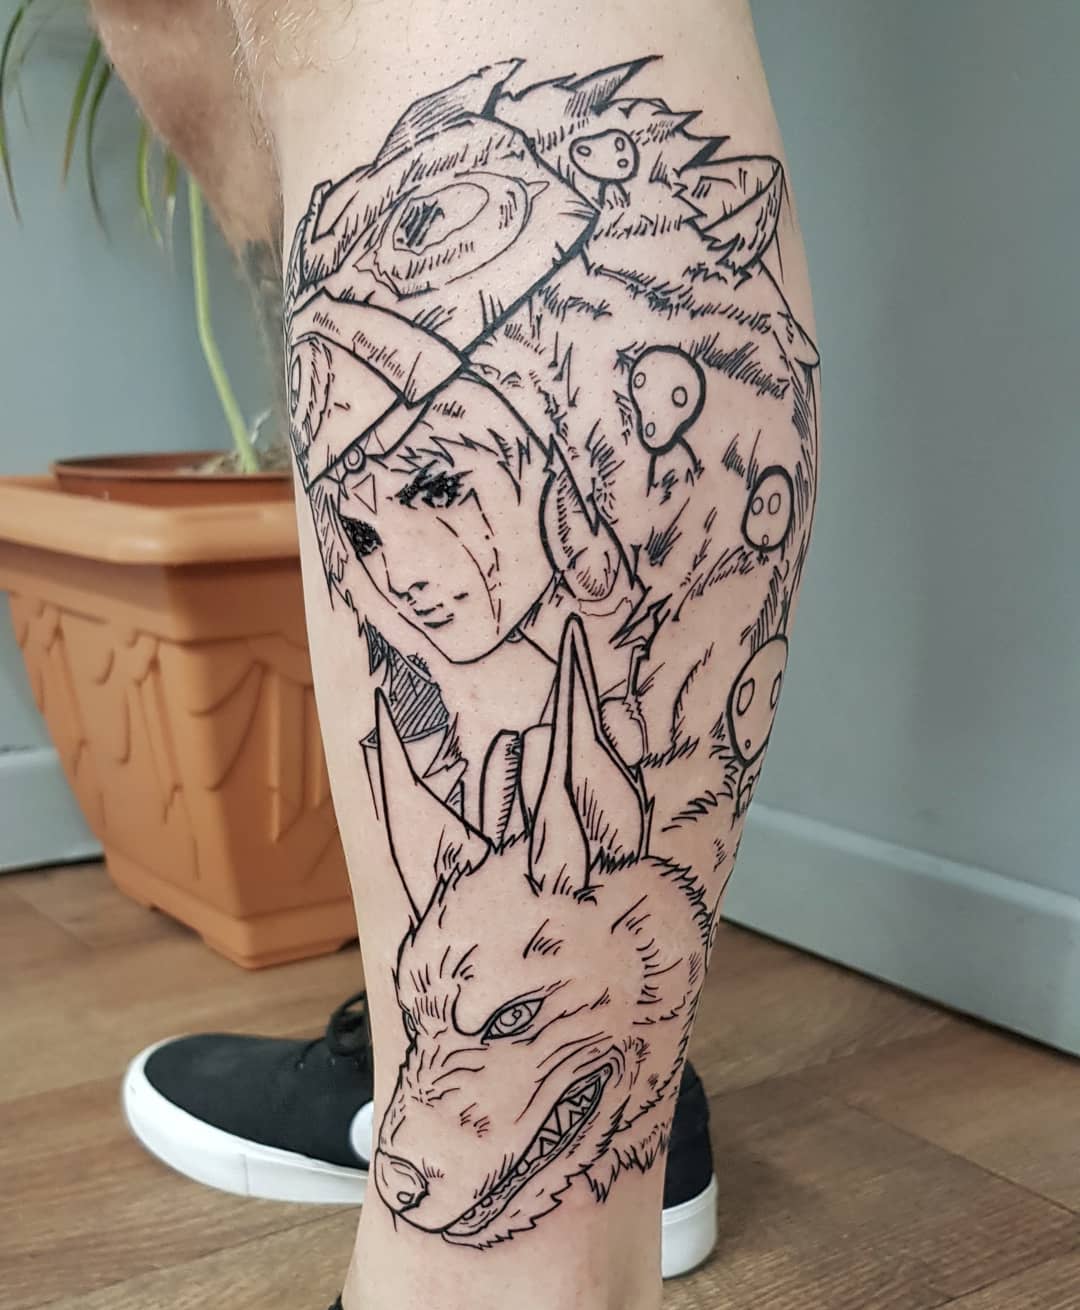 Princesse Mononoke Studio Ghibli Tattoo -lozhawnt_tattoo